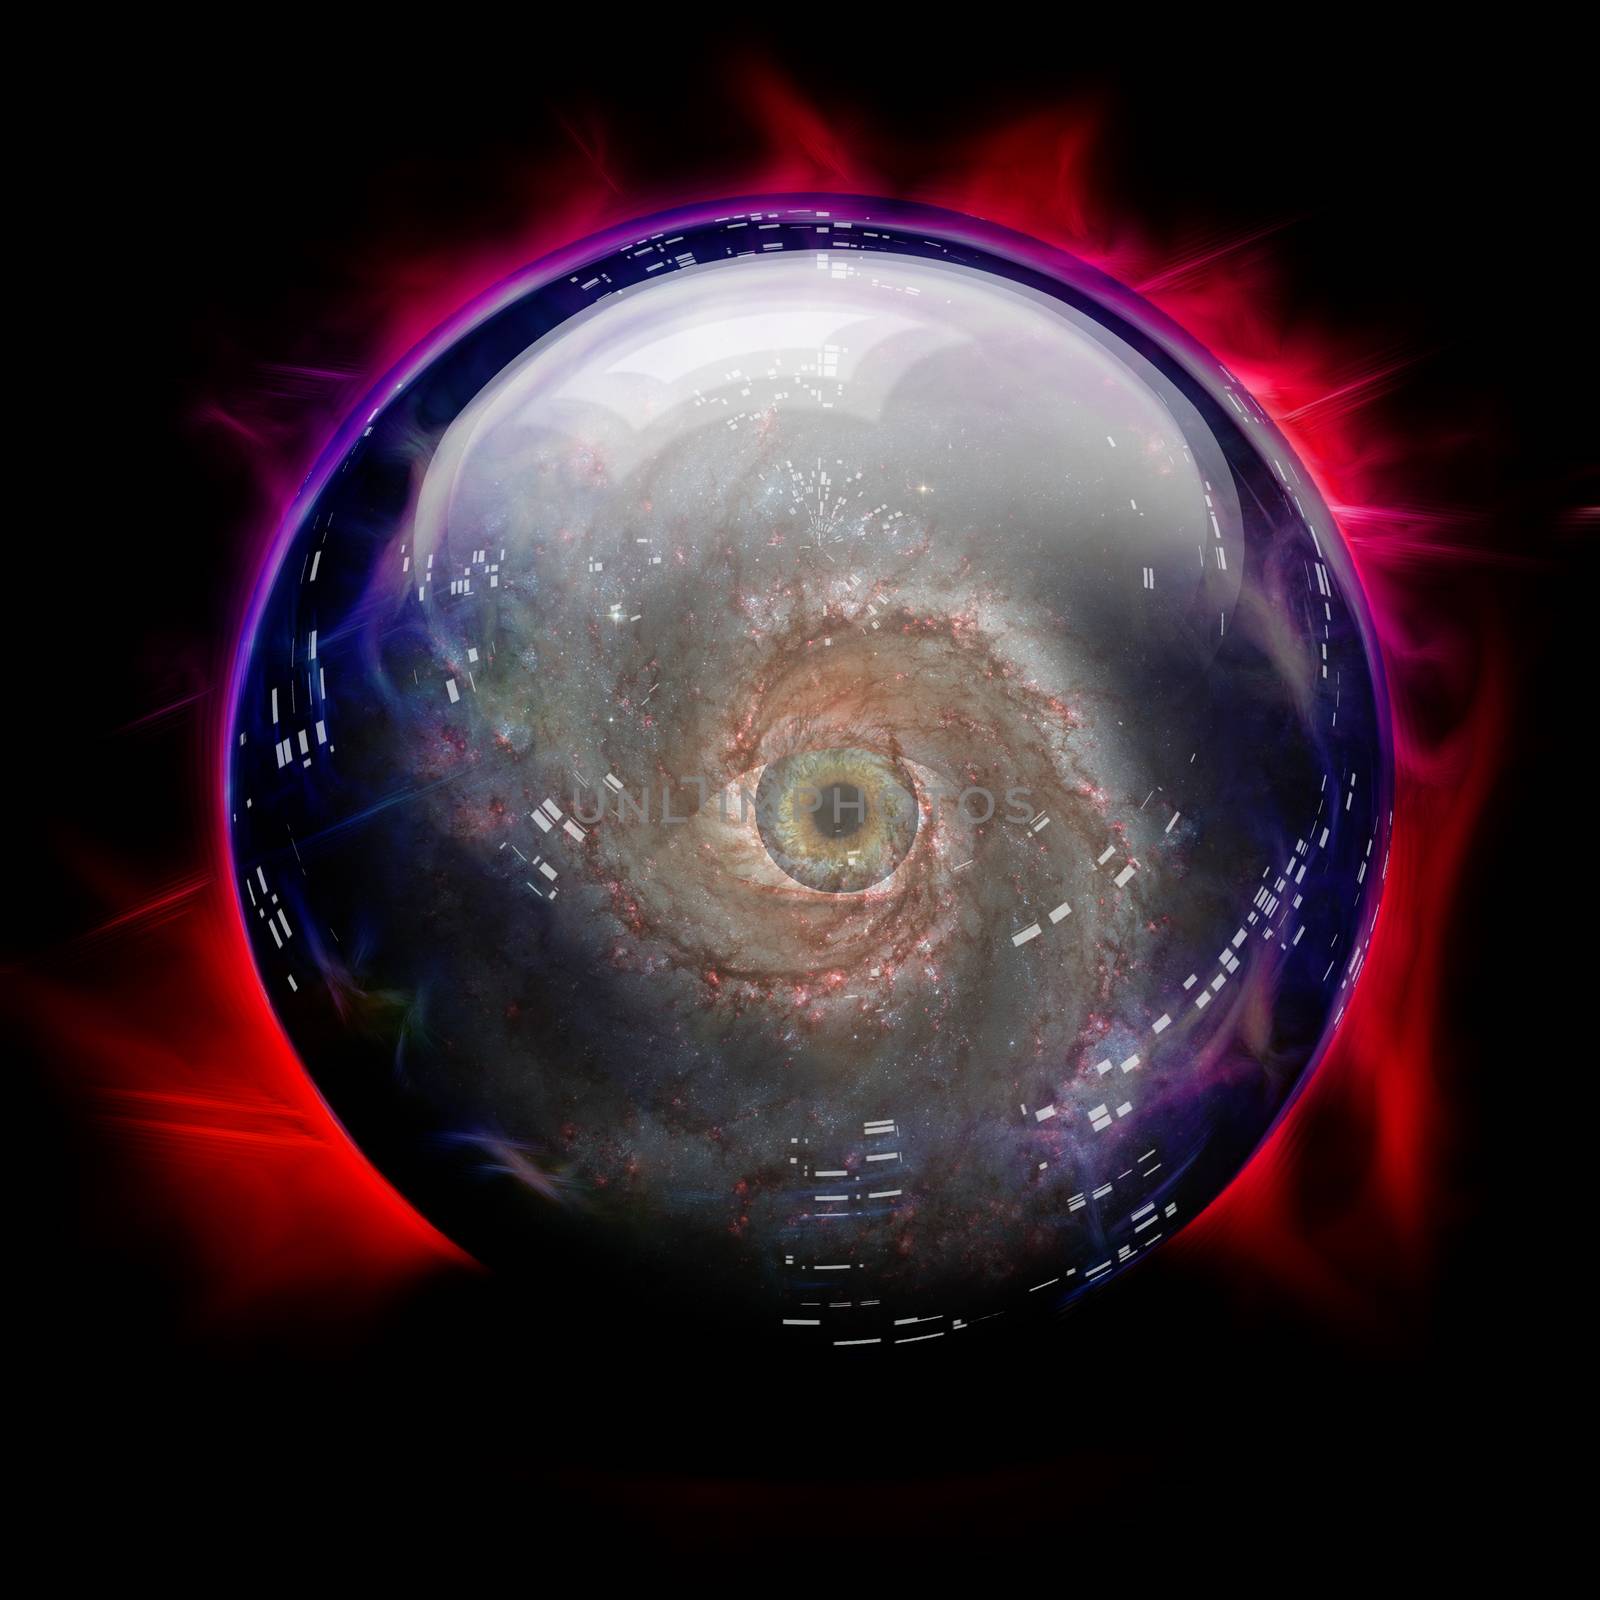 Crystal Ball with Galaxy and Eye